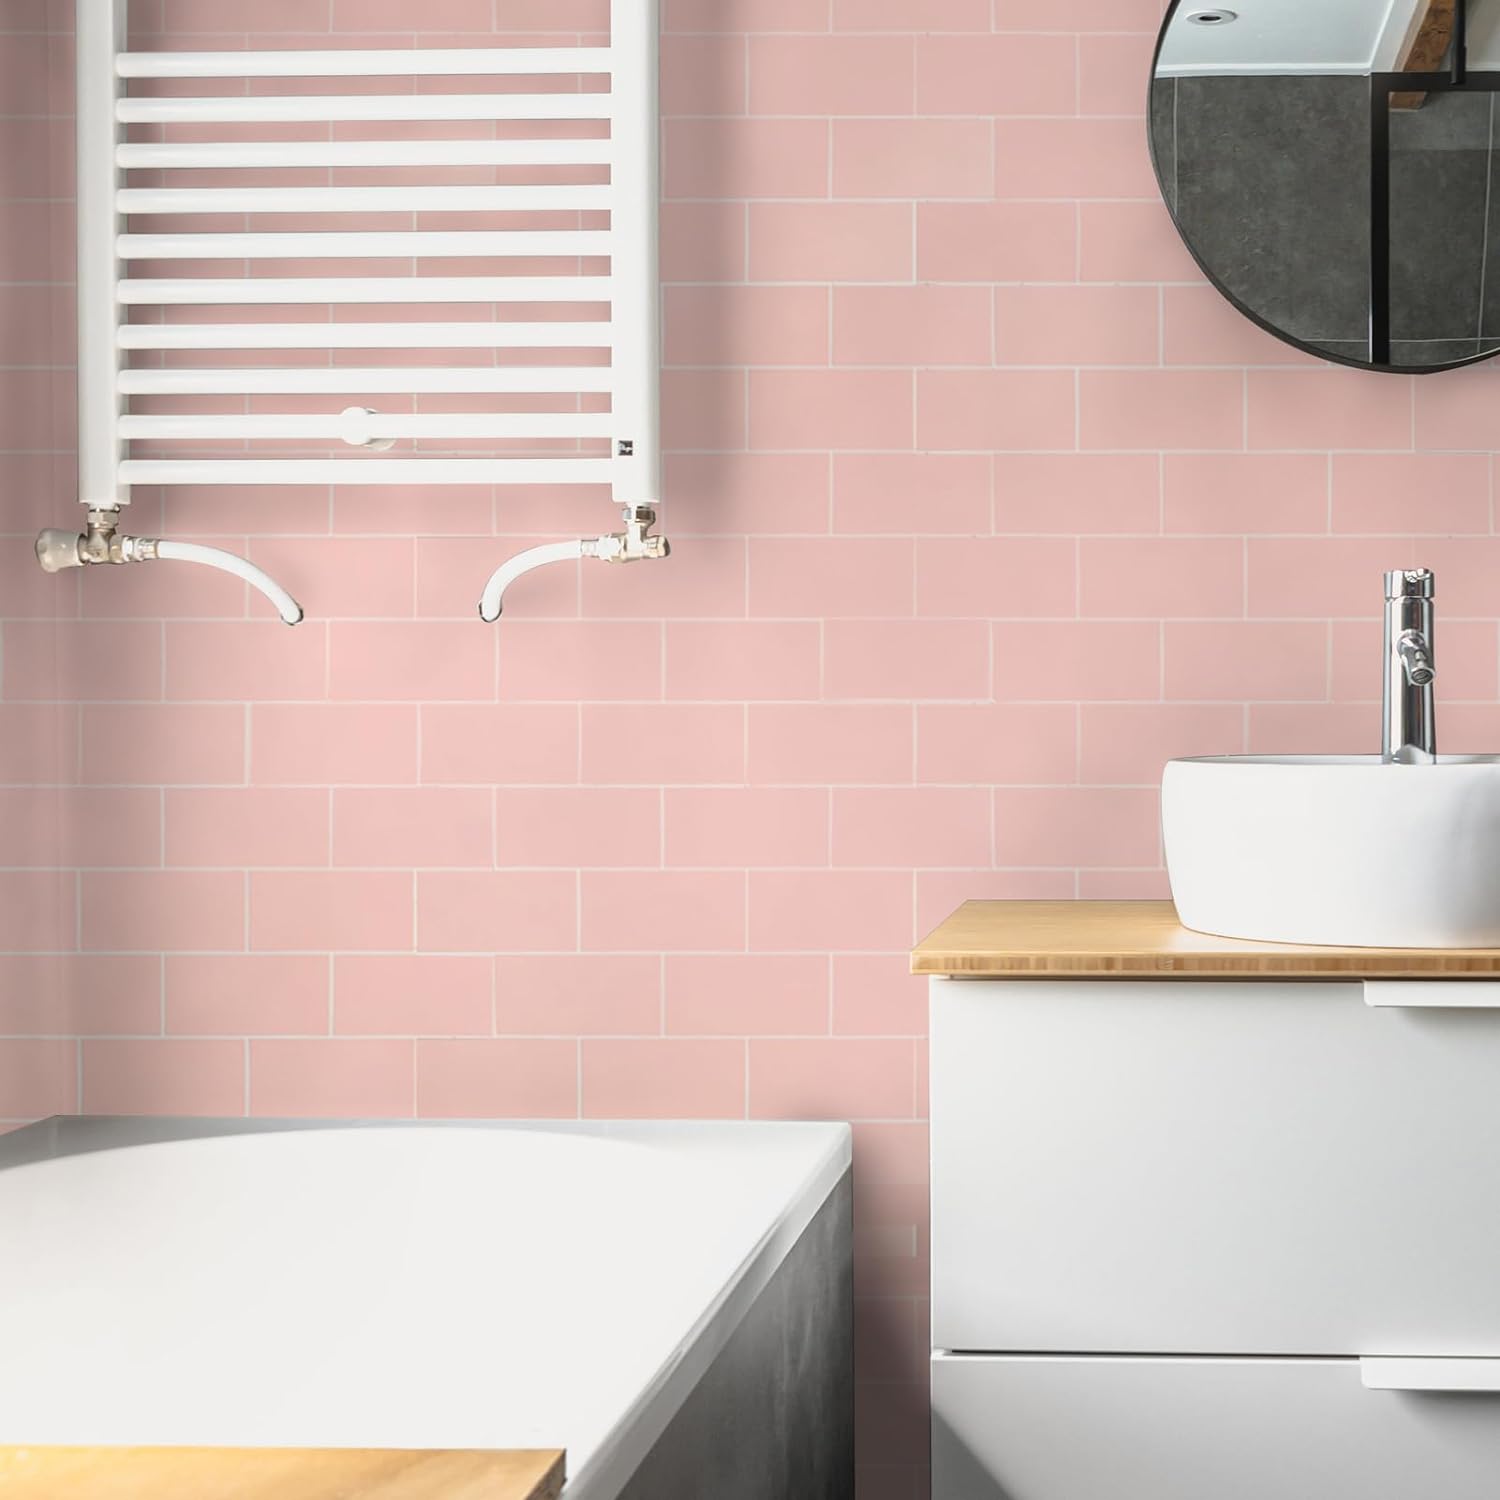 painted subway  backsplash tiles for kitchen in Pink lifestyle image